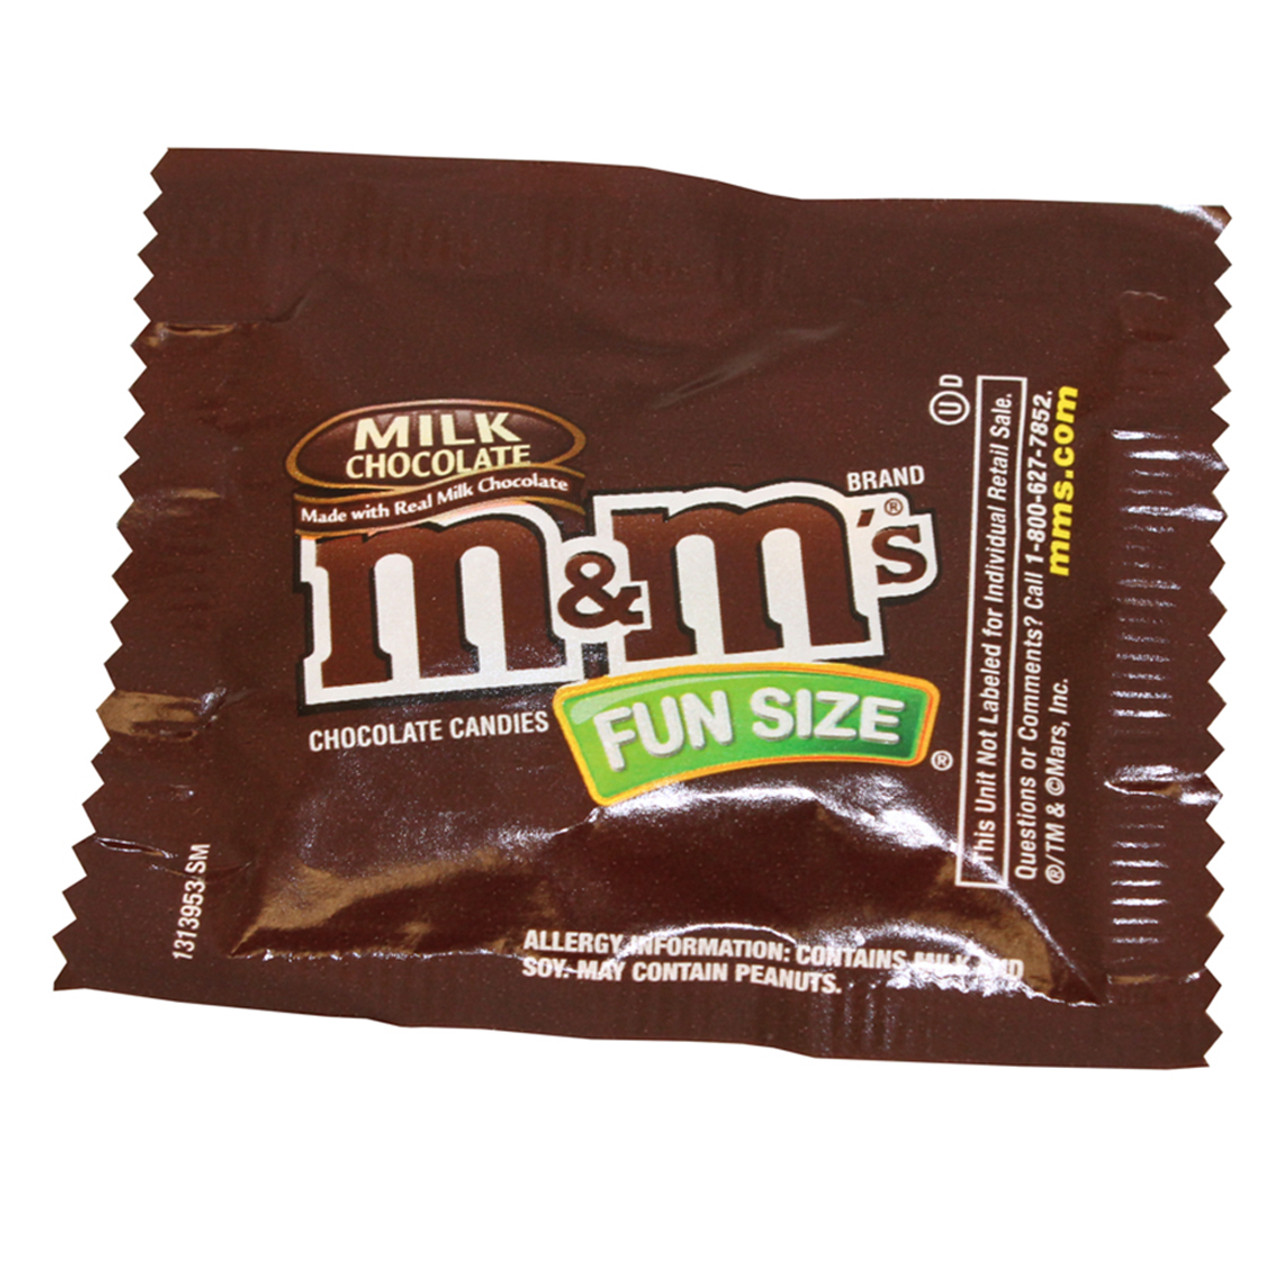 M&M's Milk Chocolate Halloween Fun Size Chocolate Candy - 17.16 oz Bag 